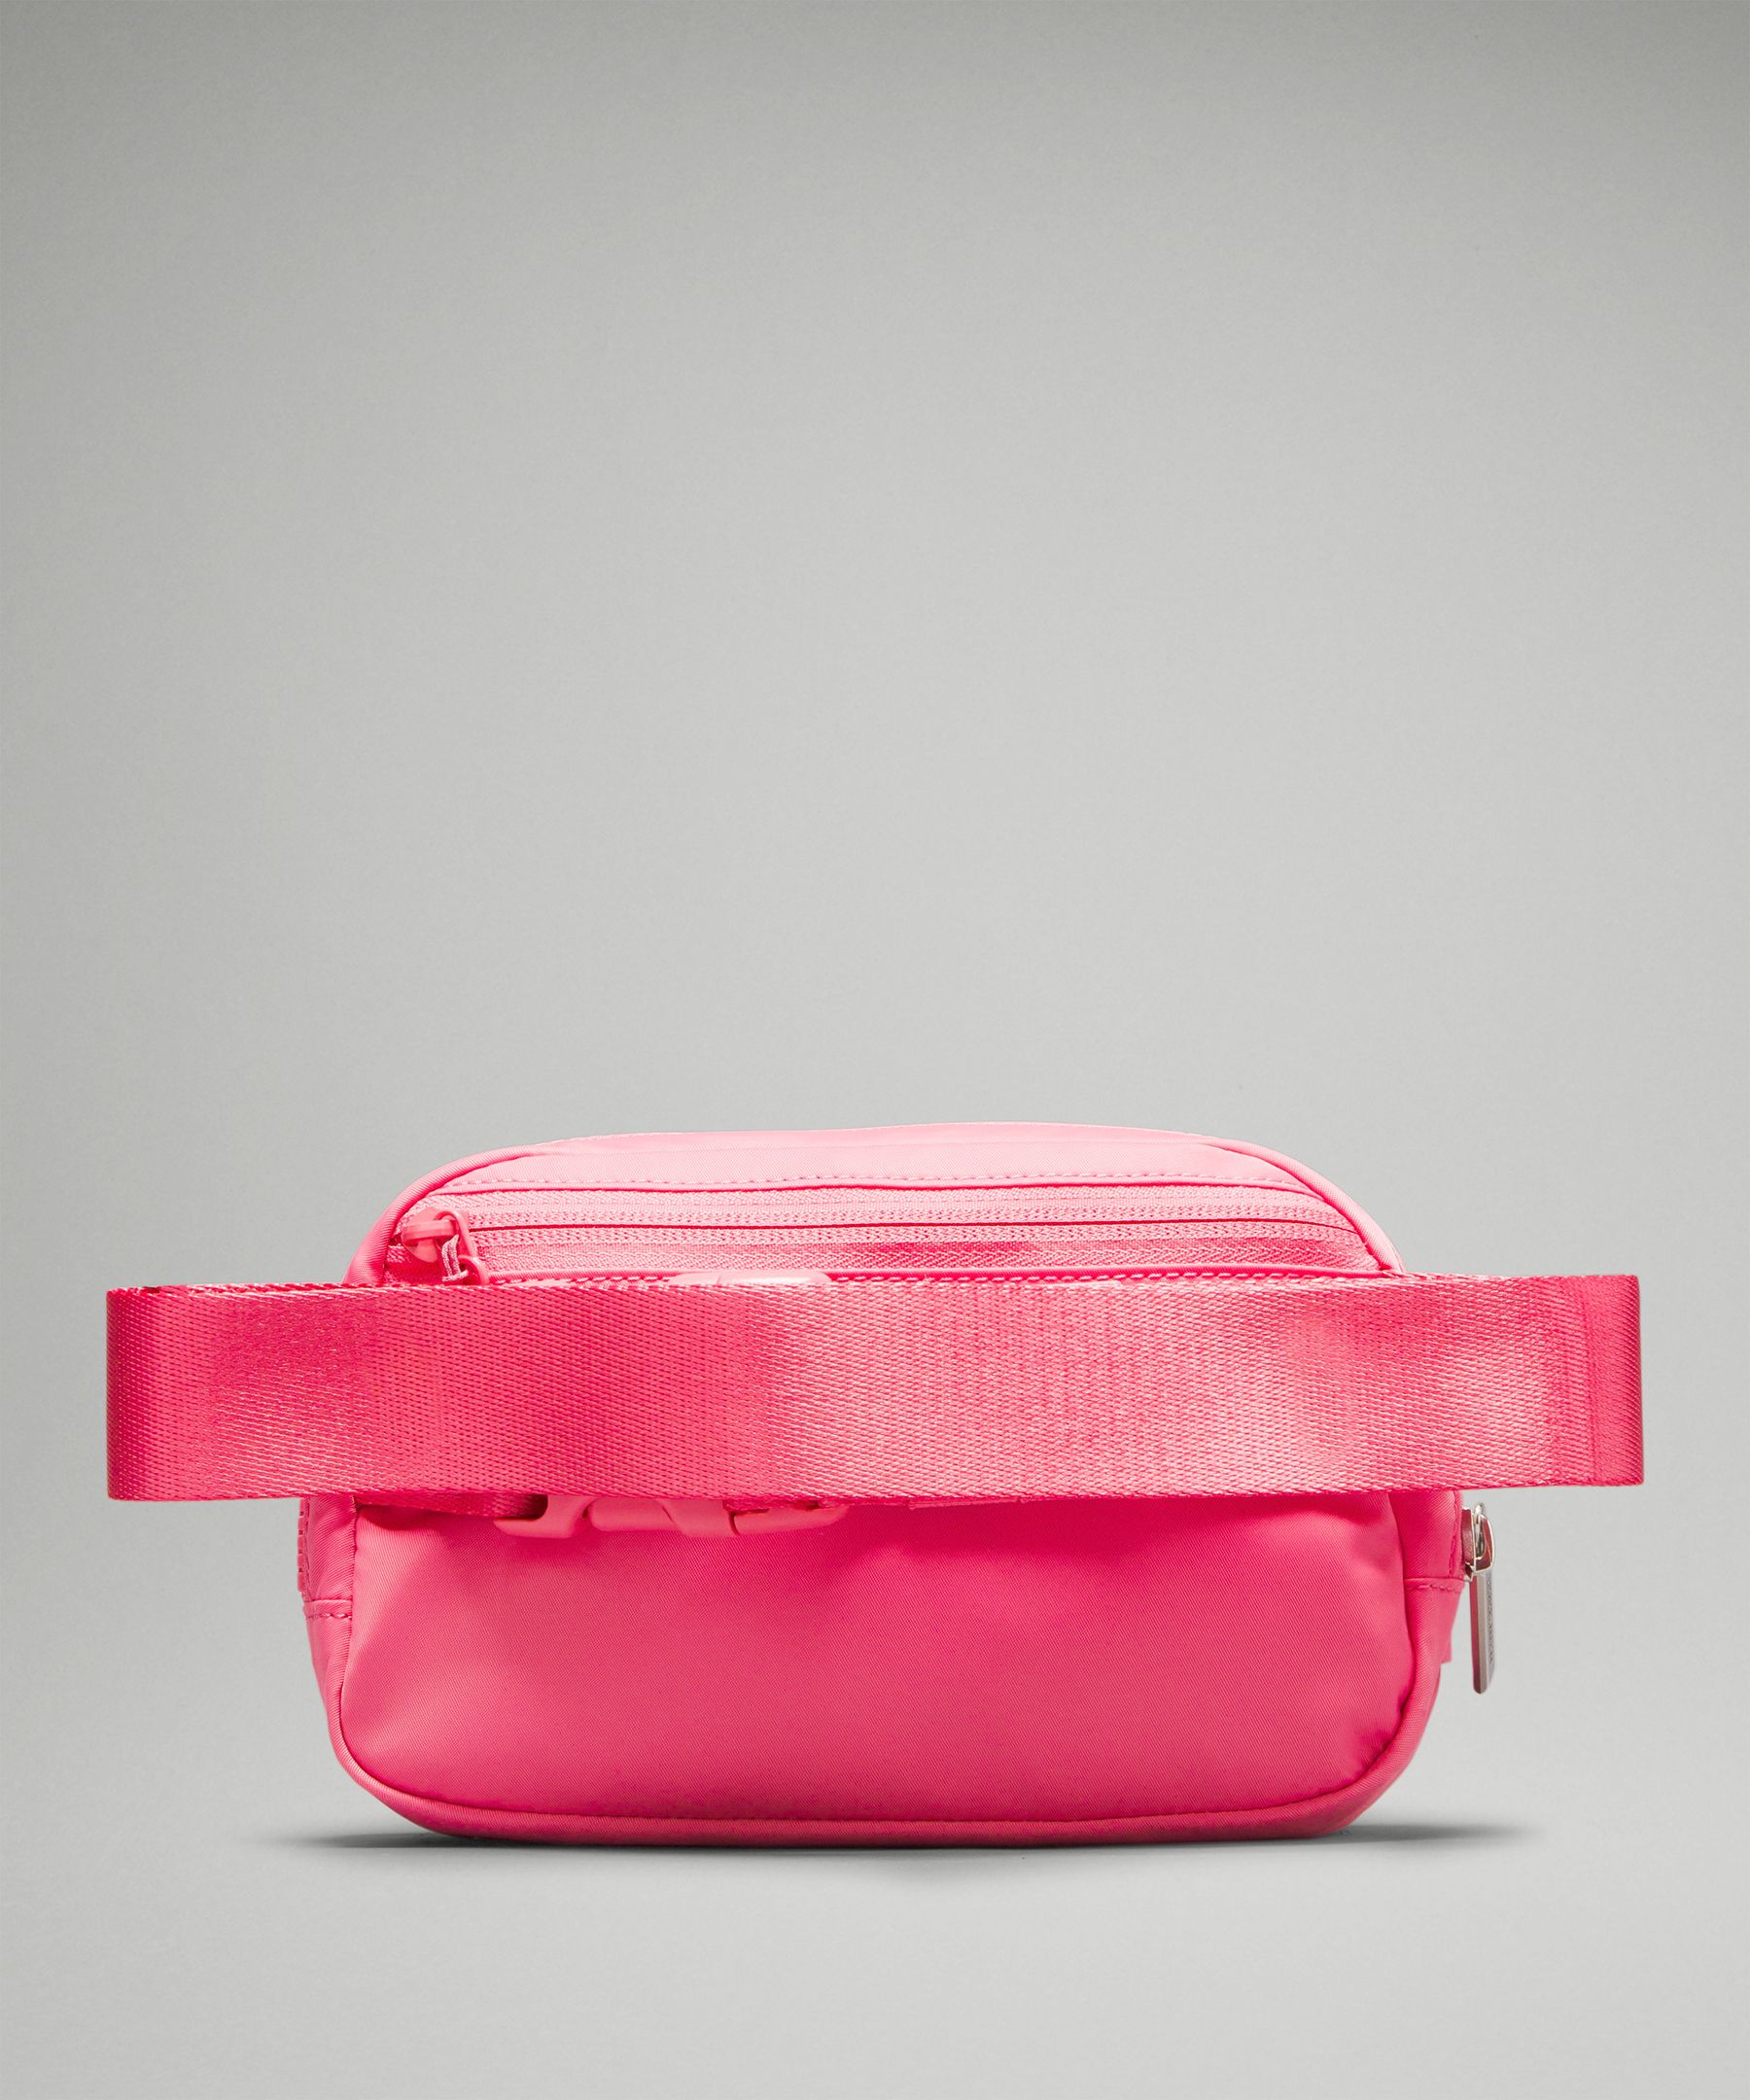 Shop Lululemon's Cult-Favorite Everywhere Belt Bag in Pastel Colors